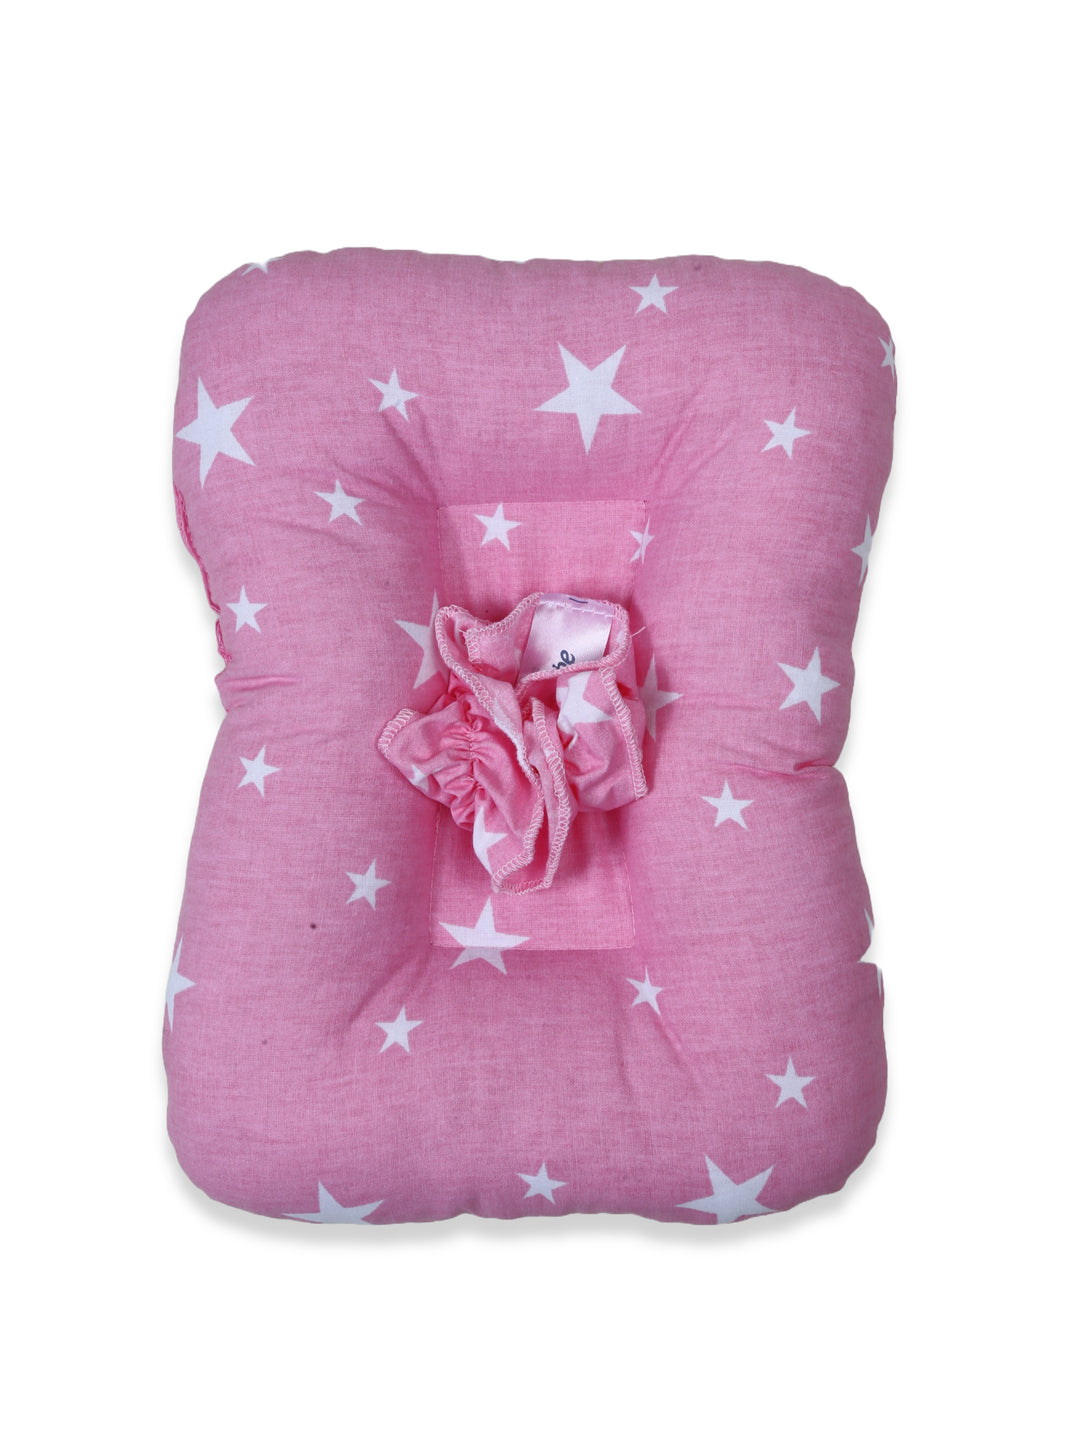 Sevi Bebe Baby Head Pillow #000769 (W-22)